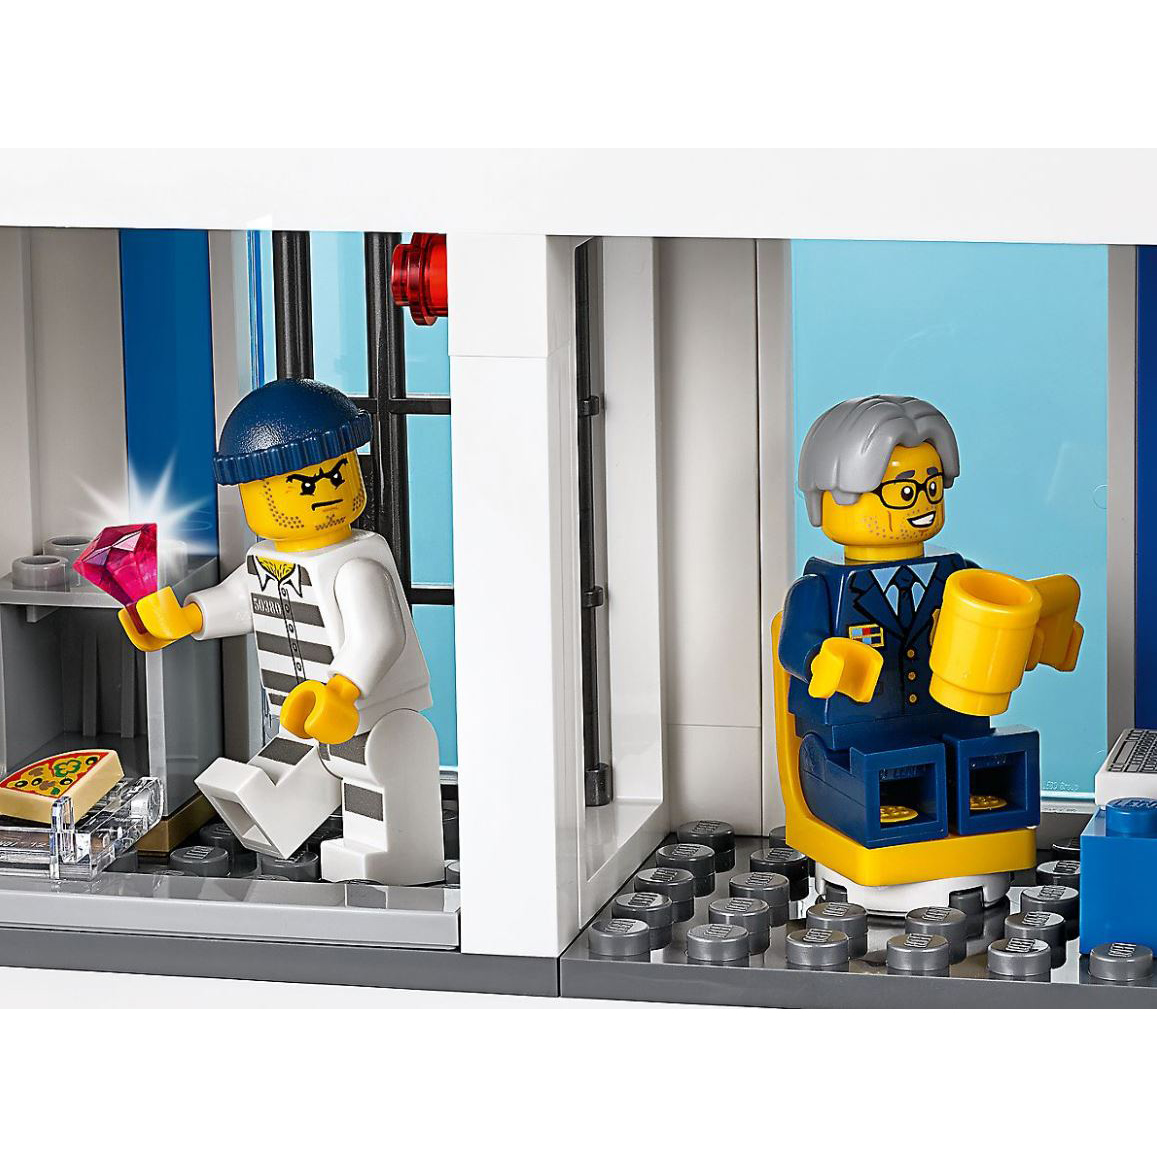 LEGO City 60246 Toy Police Station Block Building Set ...